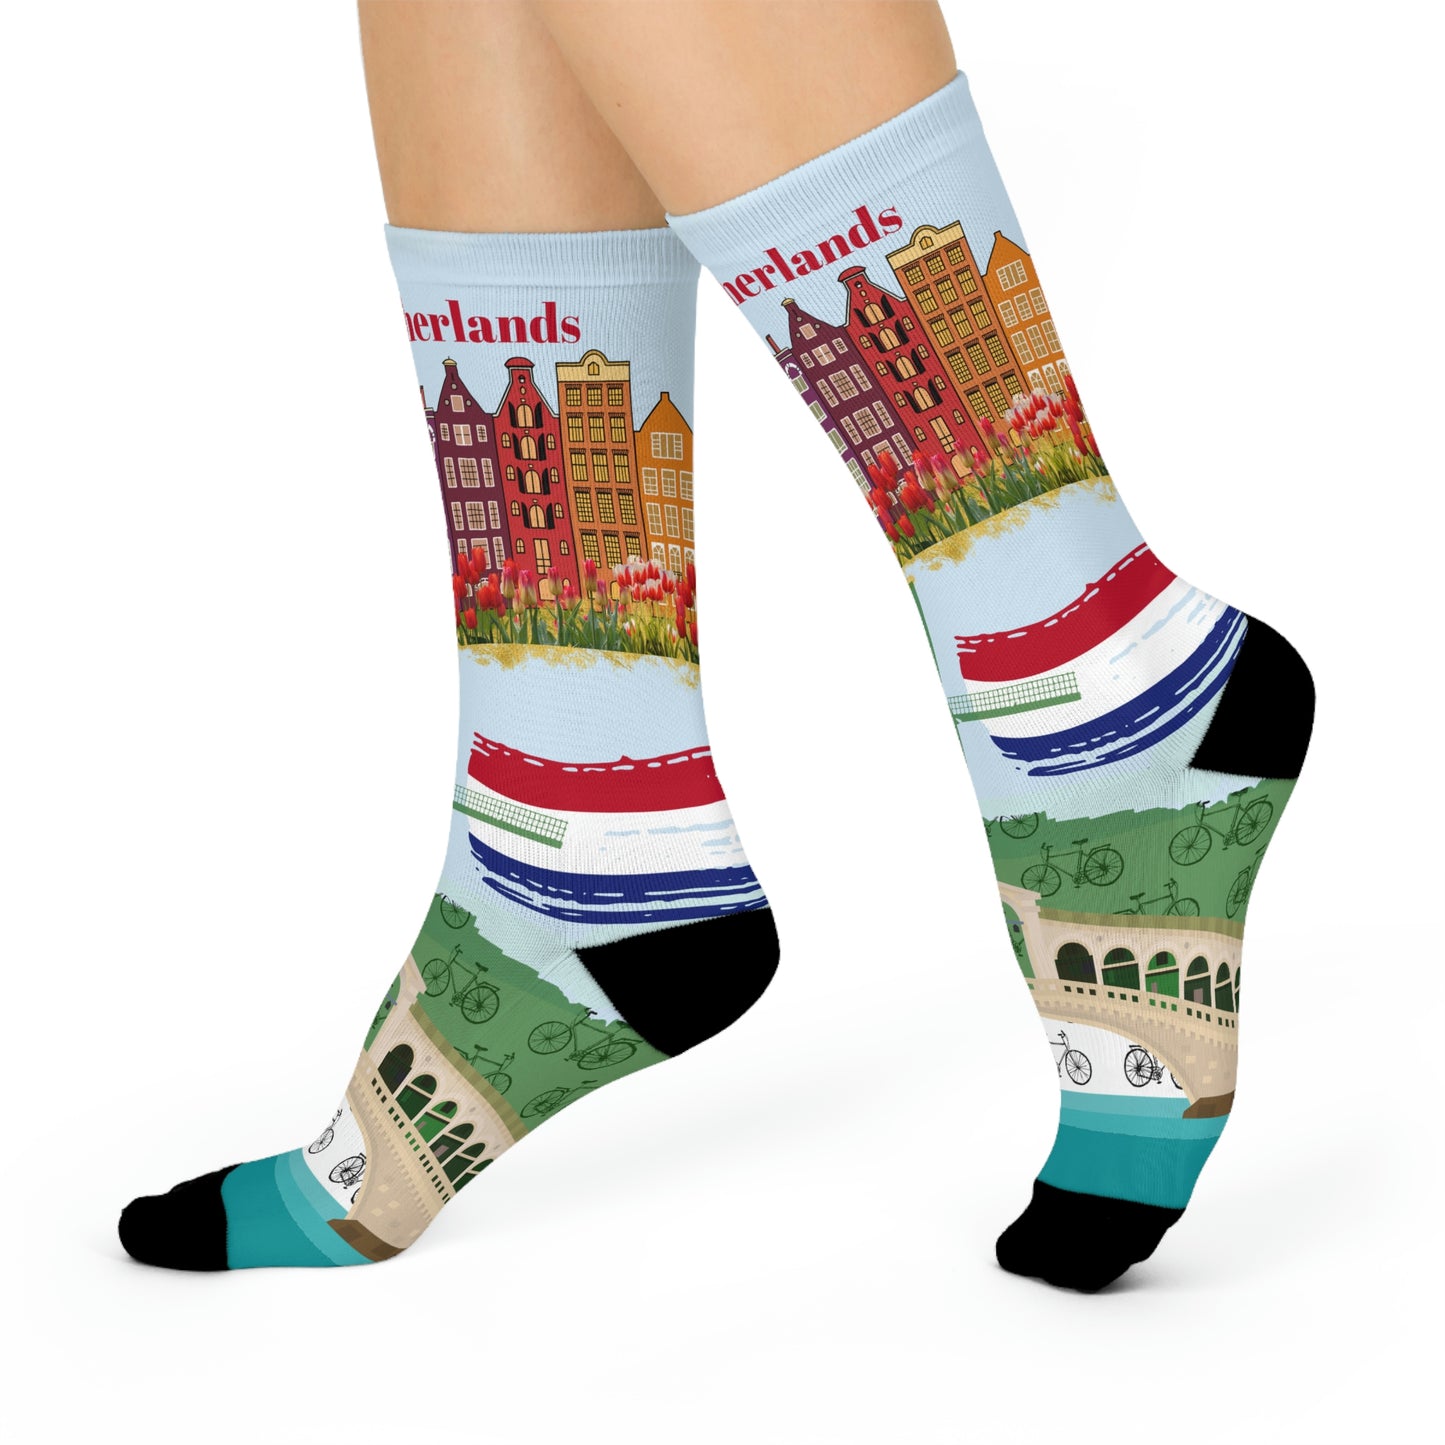 The Netherland Socks